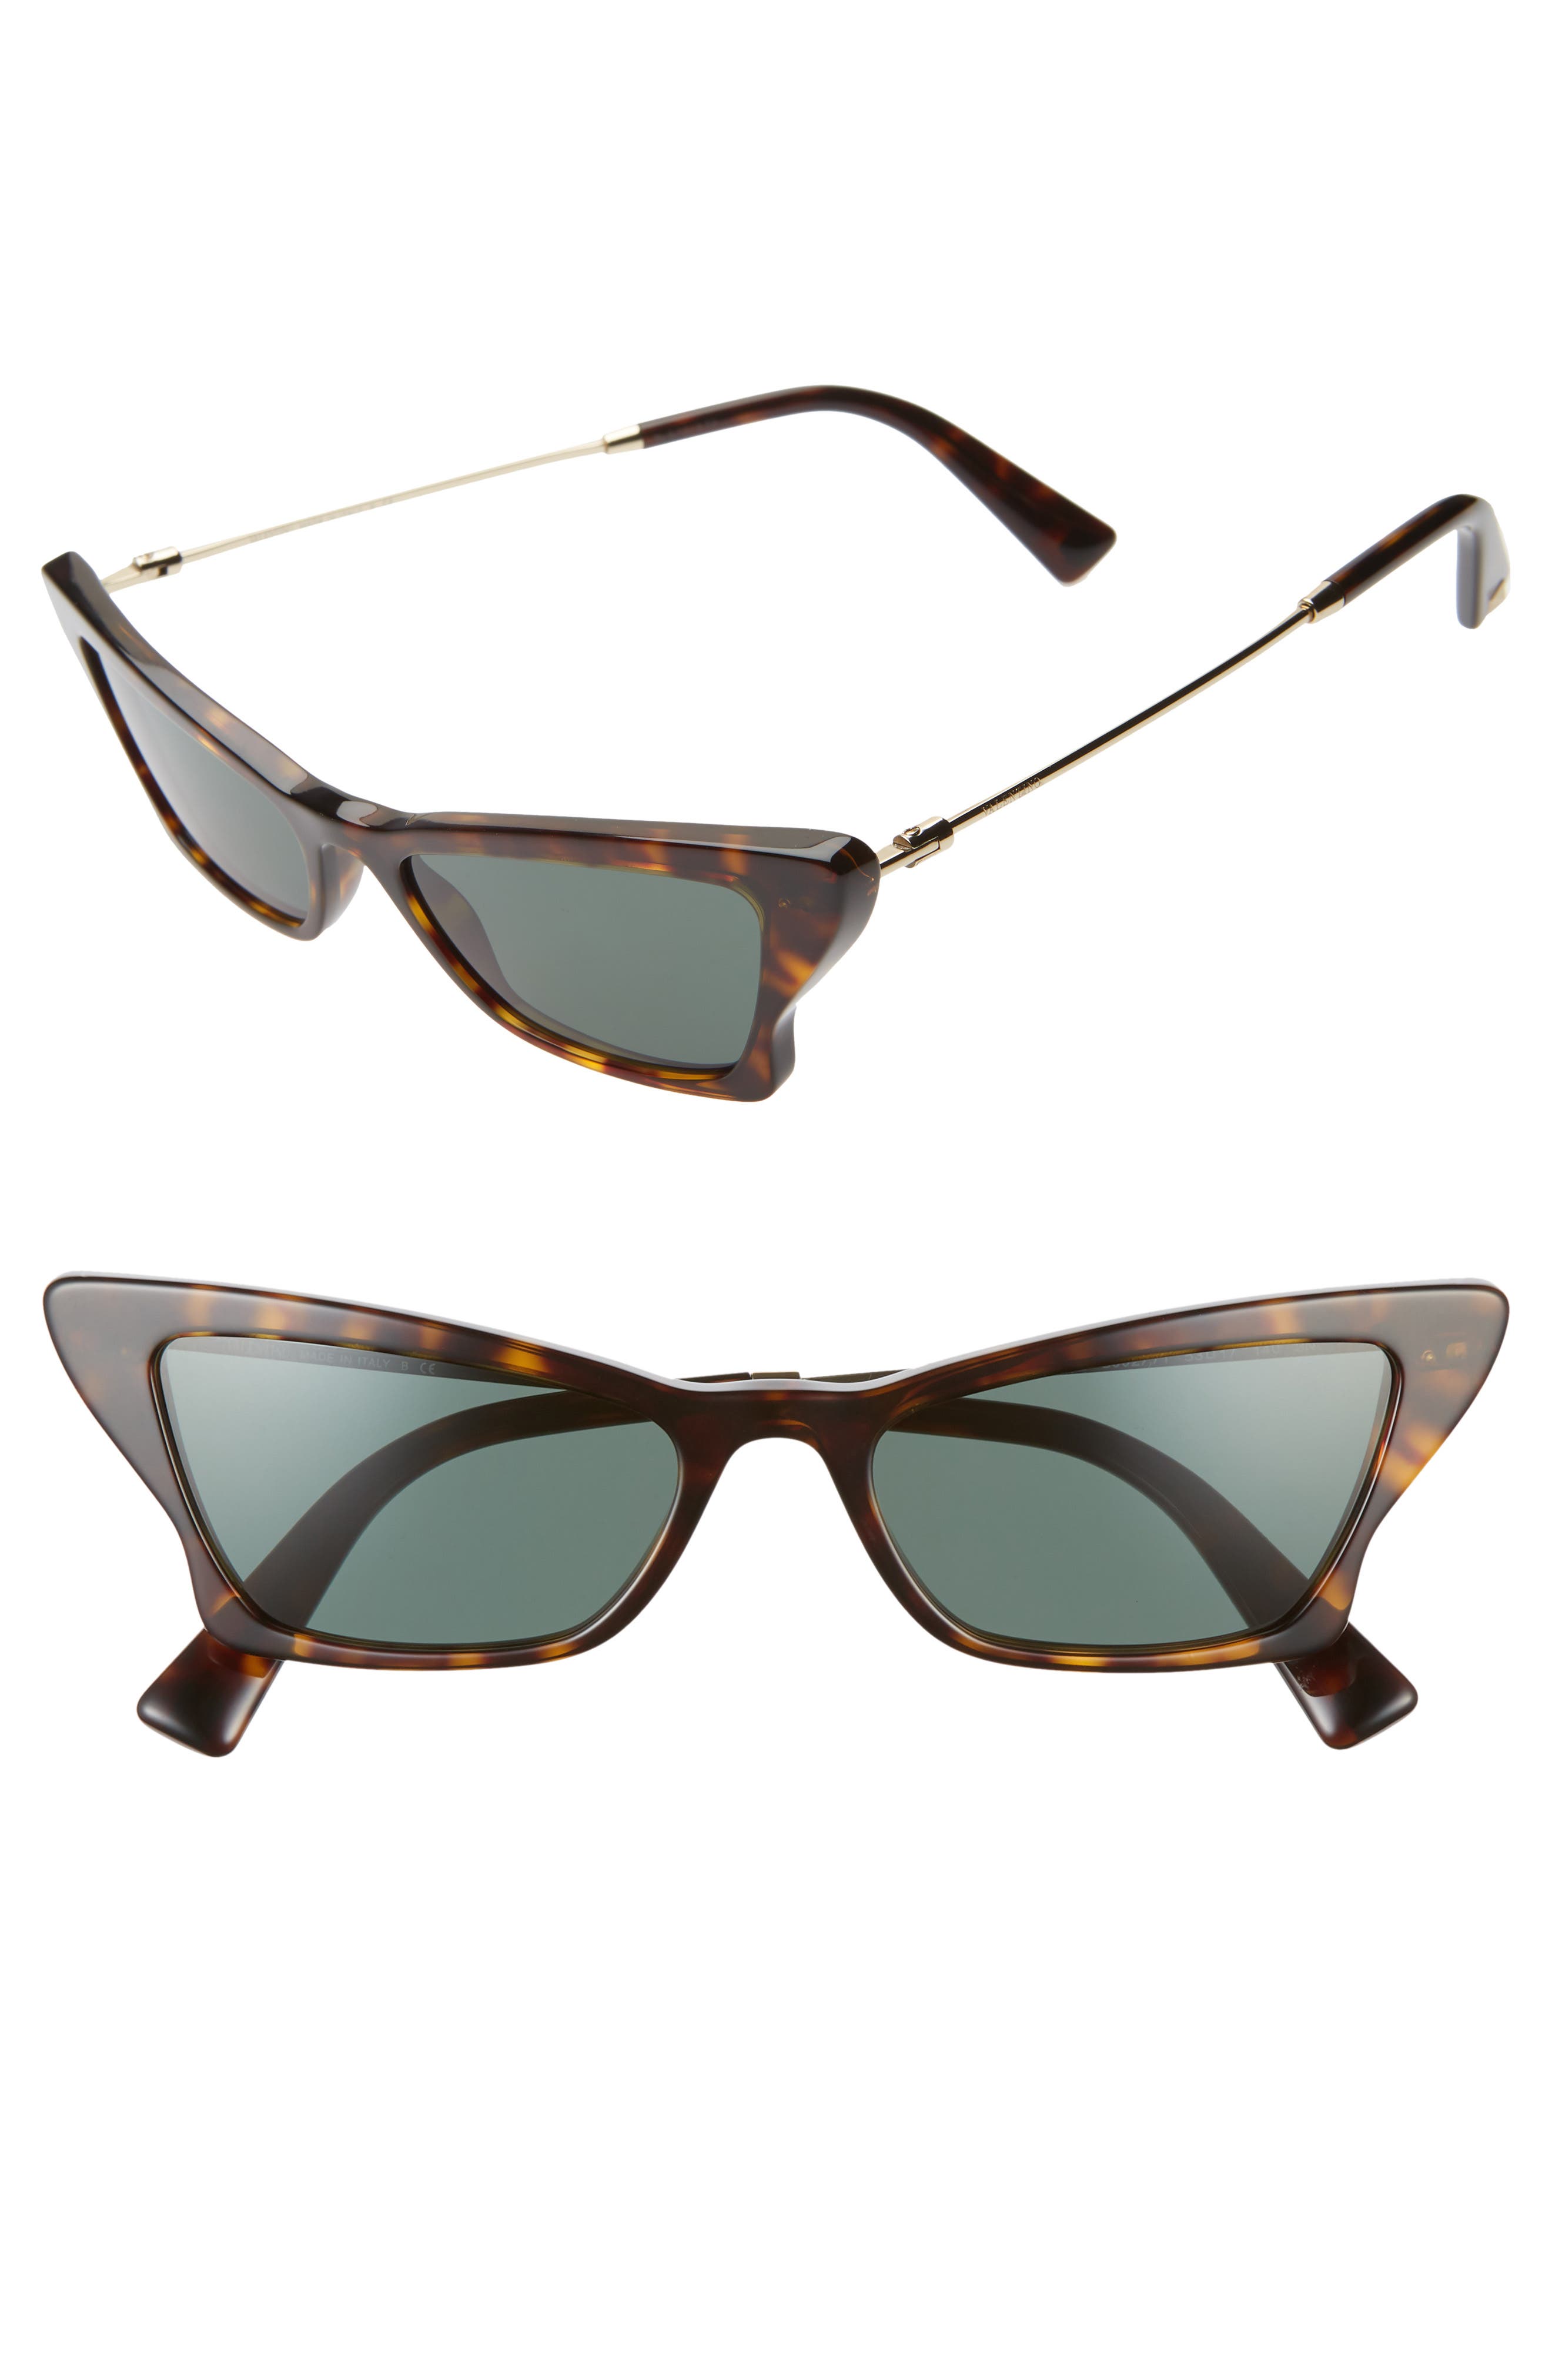 Valentino 53mm Cat Eye Sunglasses in Havana/Gold/Green Solid at Nordstrom